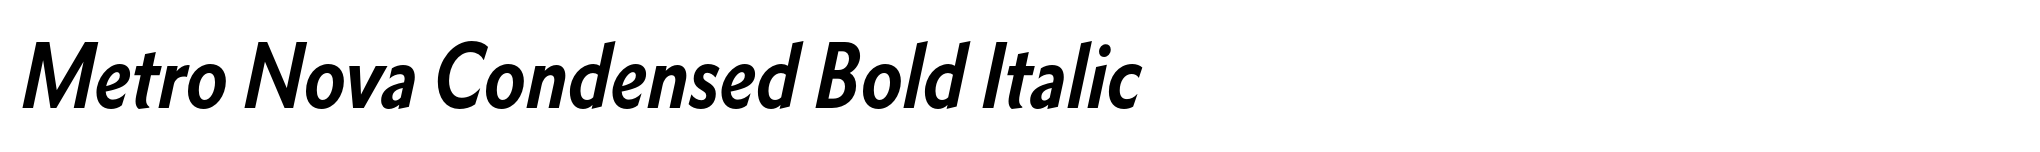 Metro Nova Condensed Bold Italic image